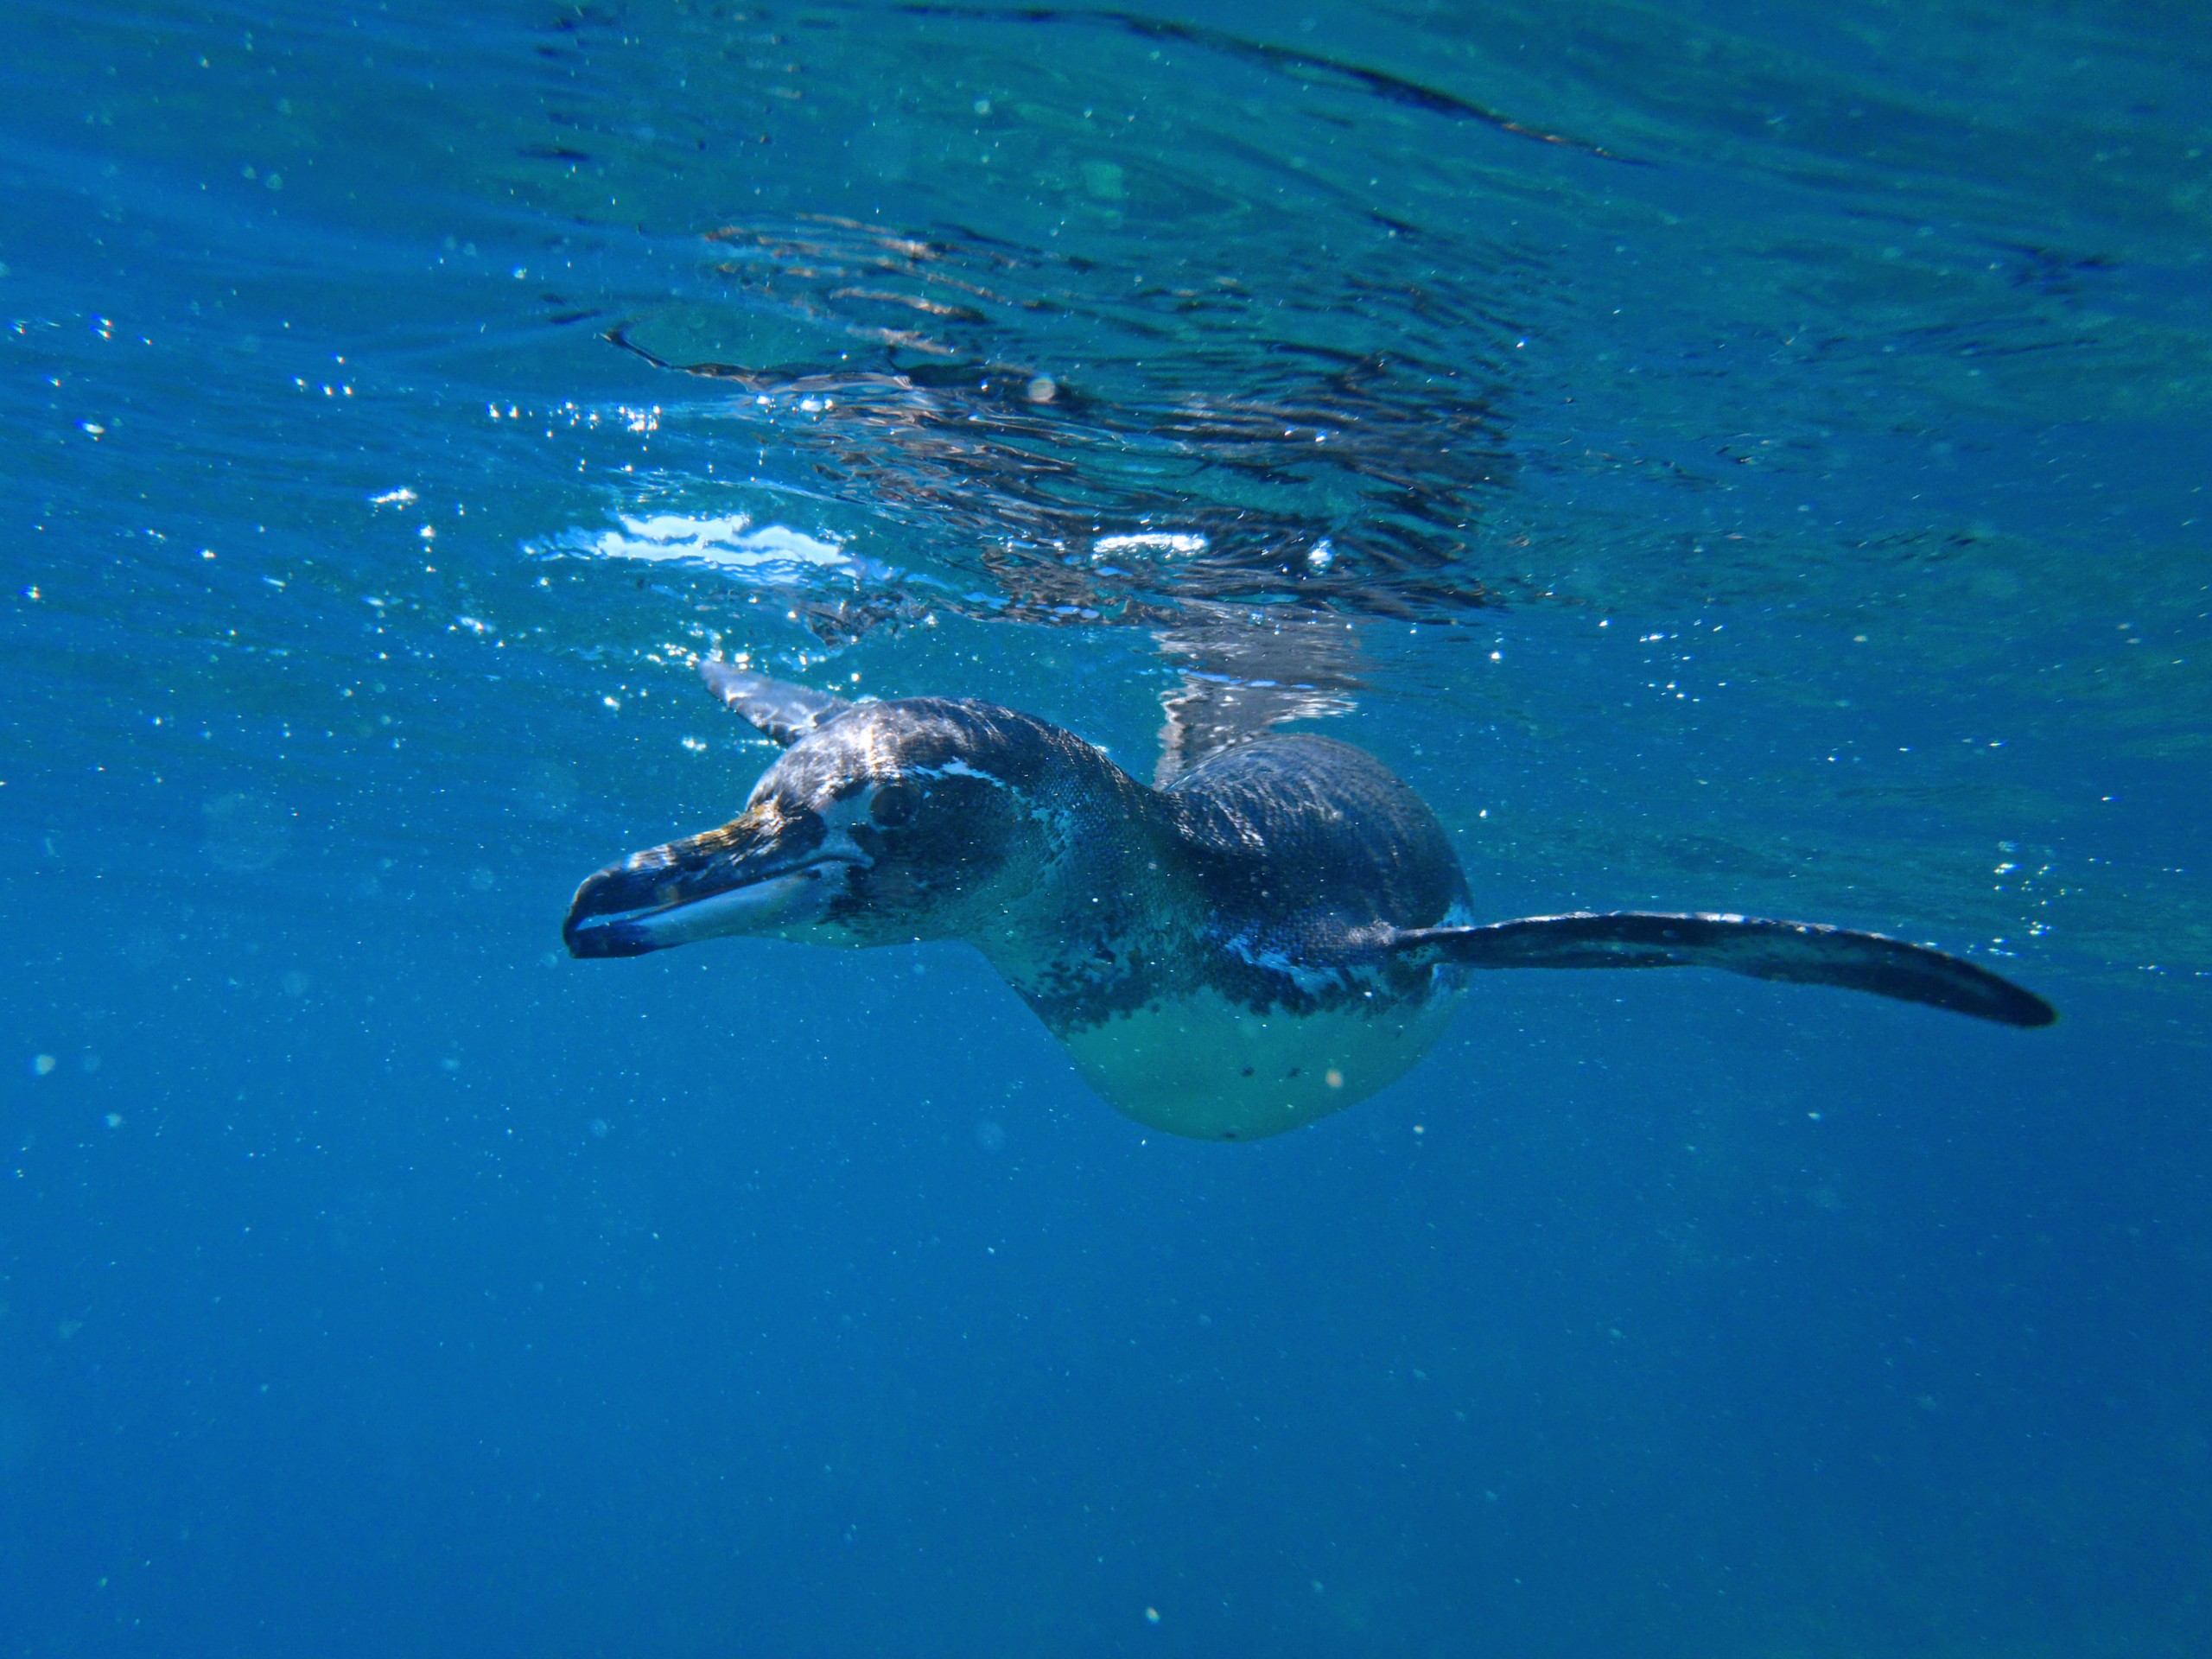 Penguin in water at Galapagos